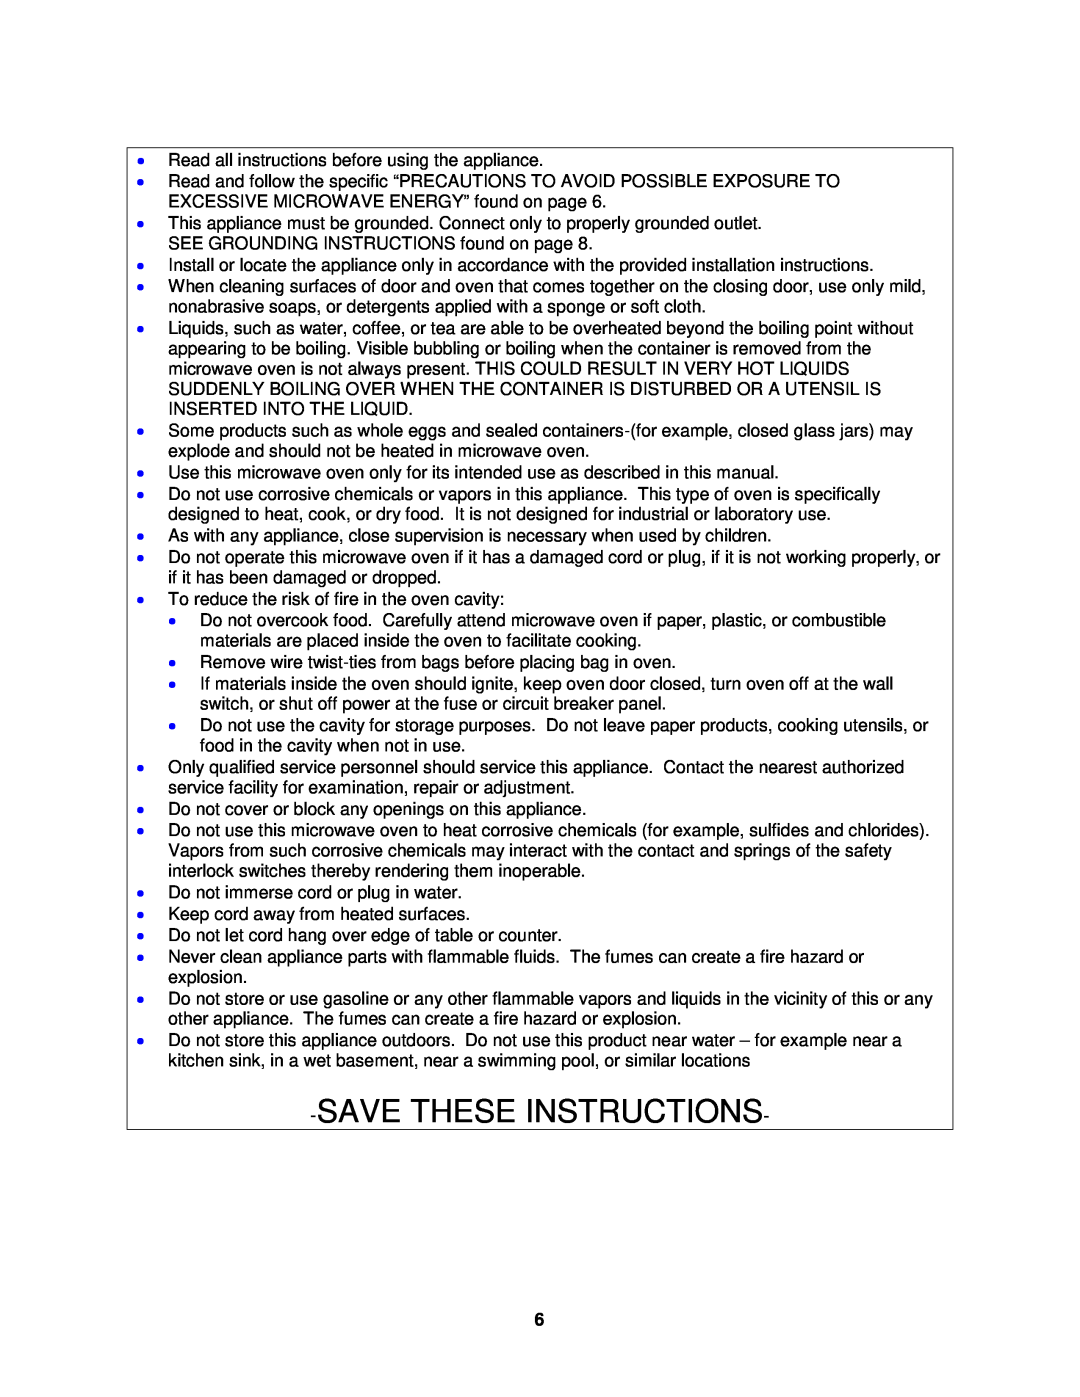 Avanti MO9005BST instruction manual Savethese Instructions 